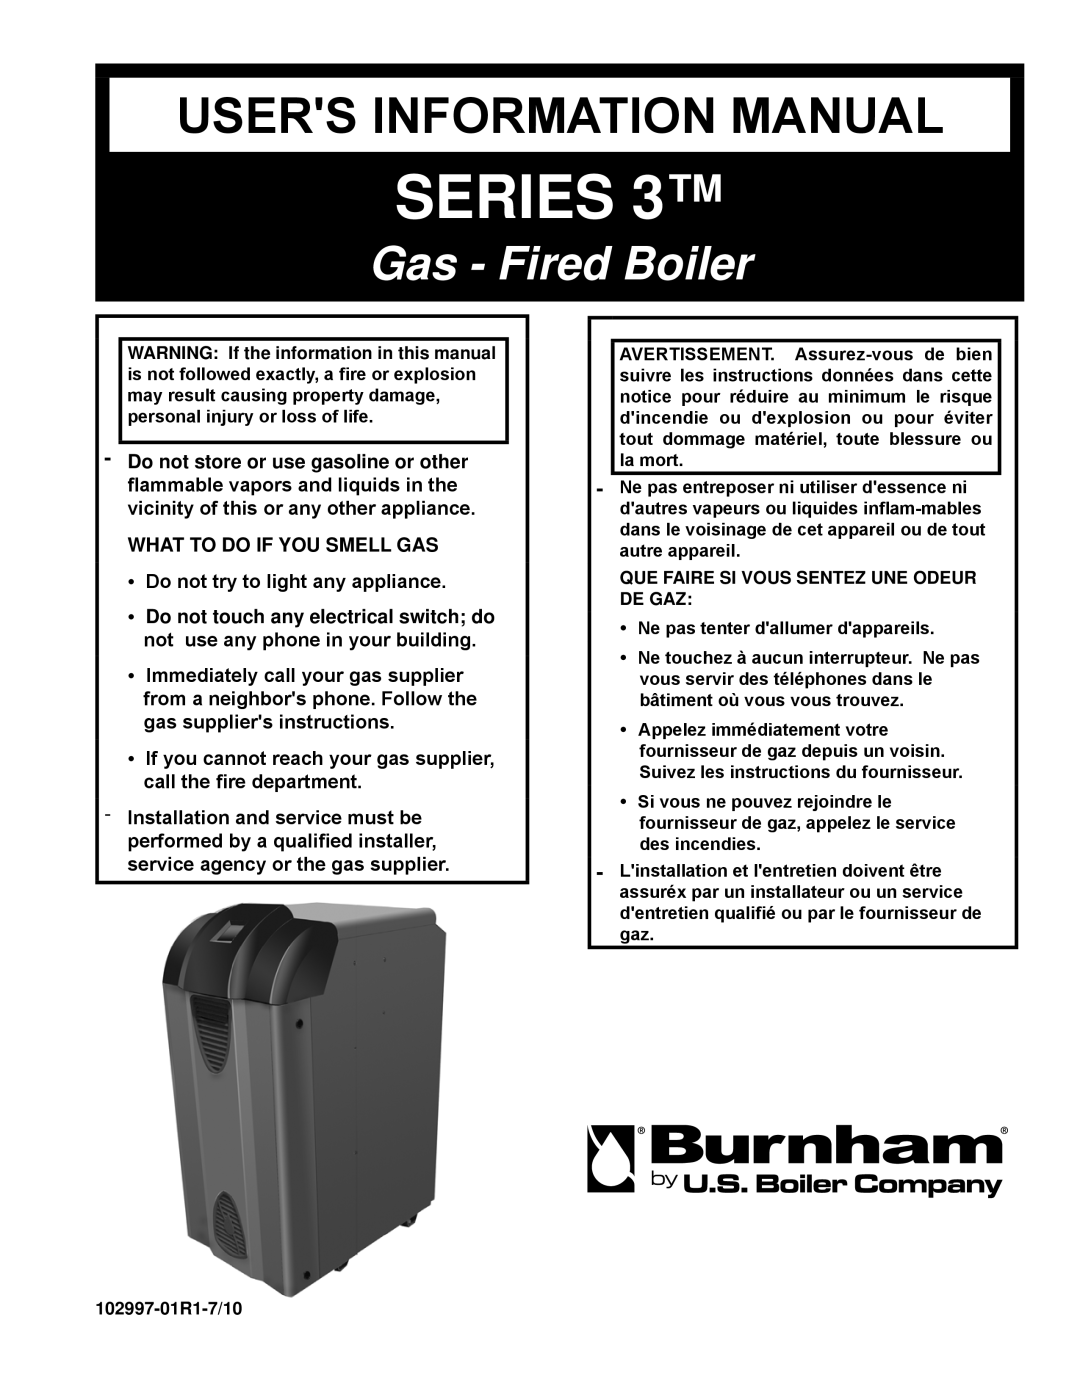 Burnham 1099-01R1-/10 manual Series , Users Information Manual, Gas - Fired Boiler 